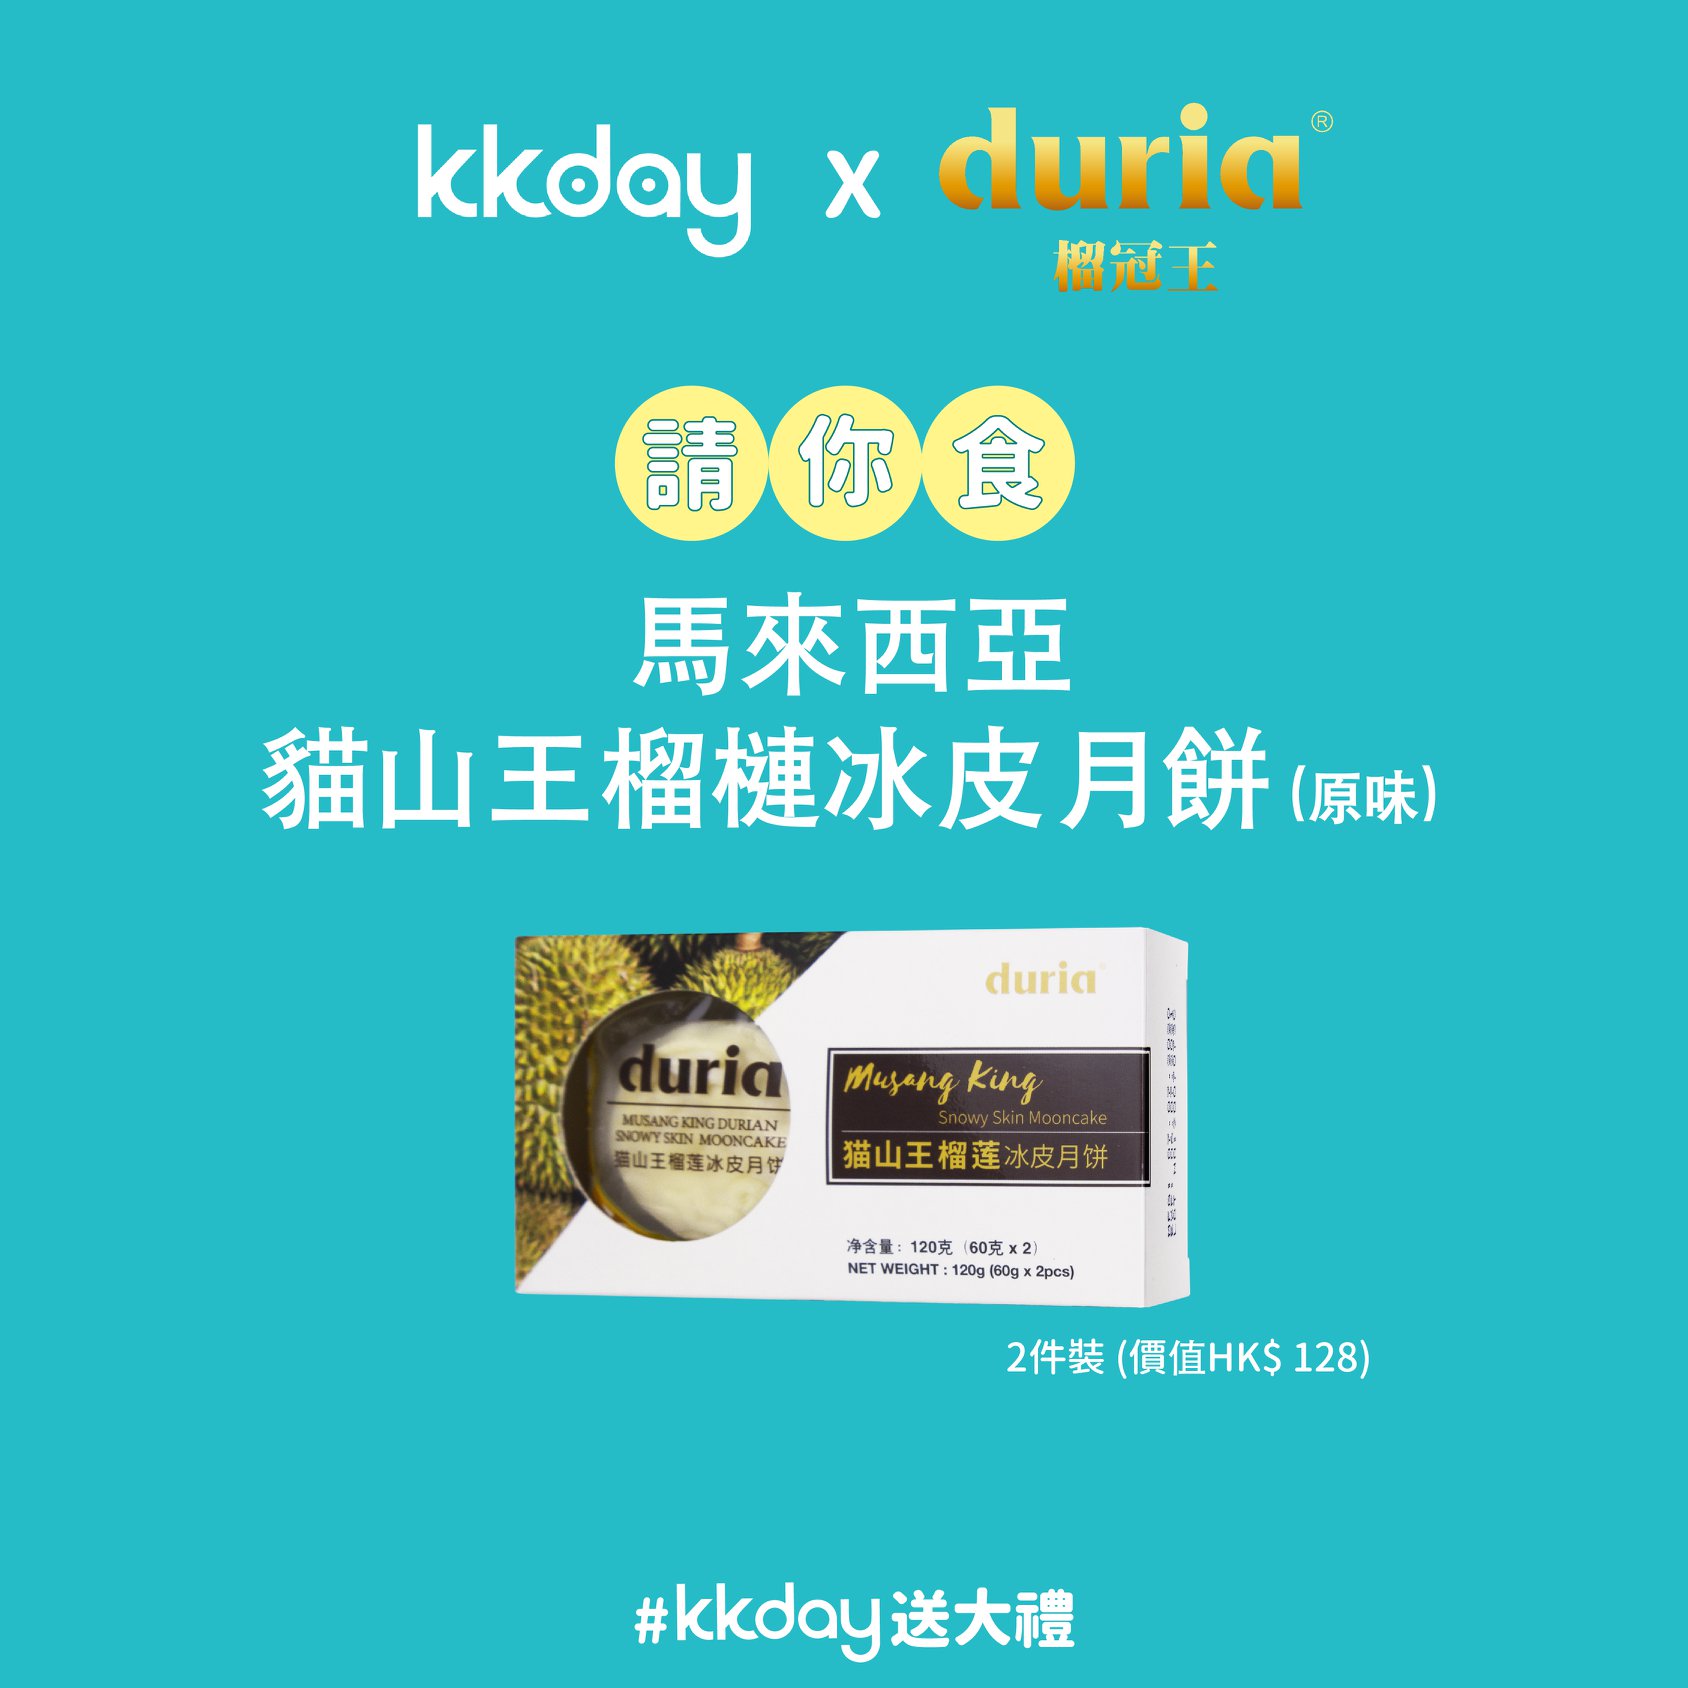 KKday 有獎遊戲送 馬來西亞貓山王榴槤冰皮月餅